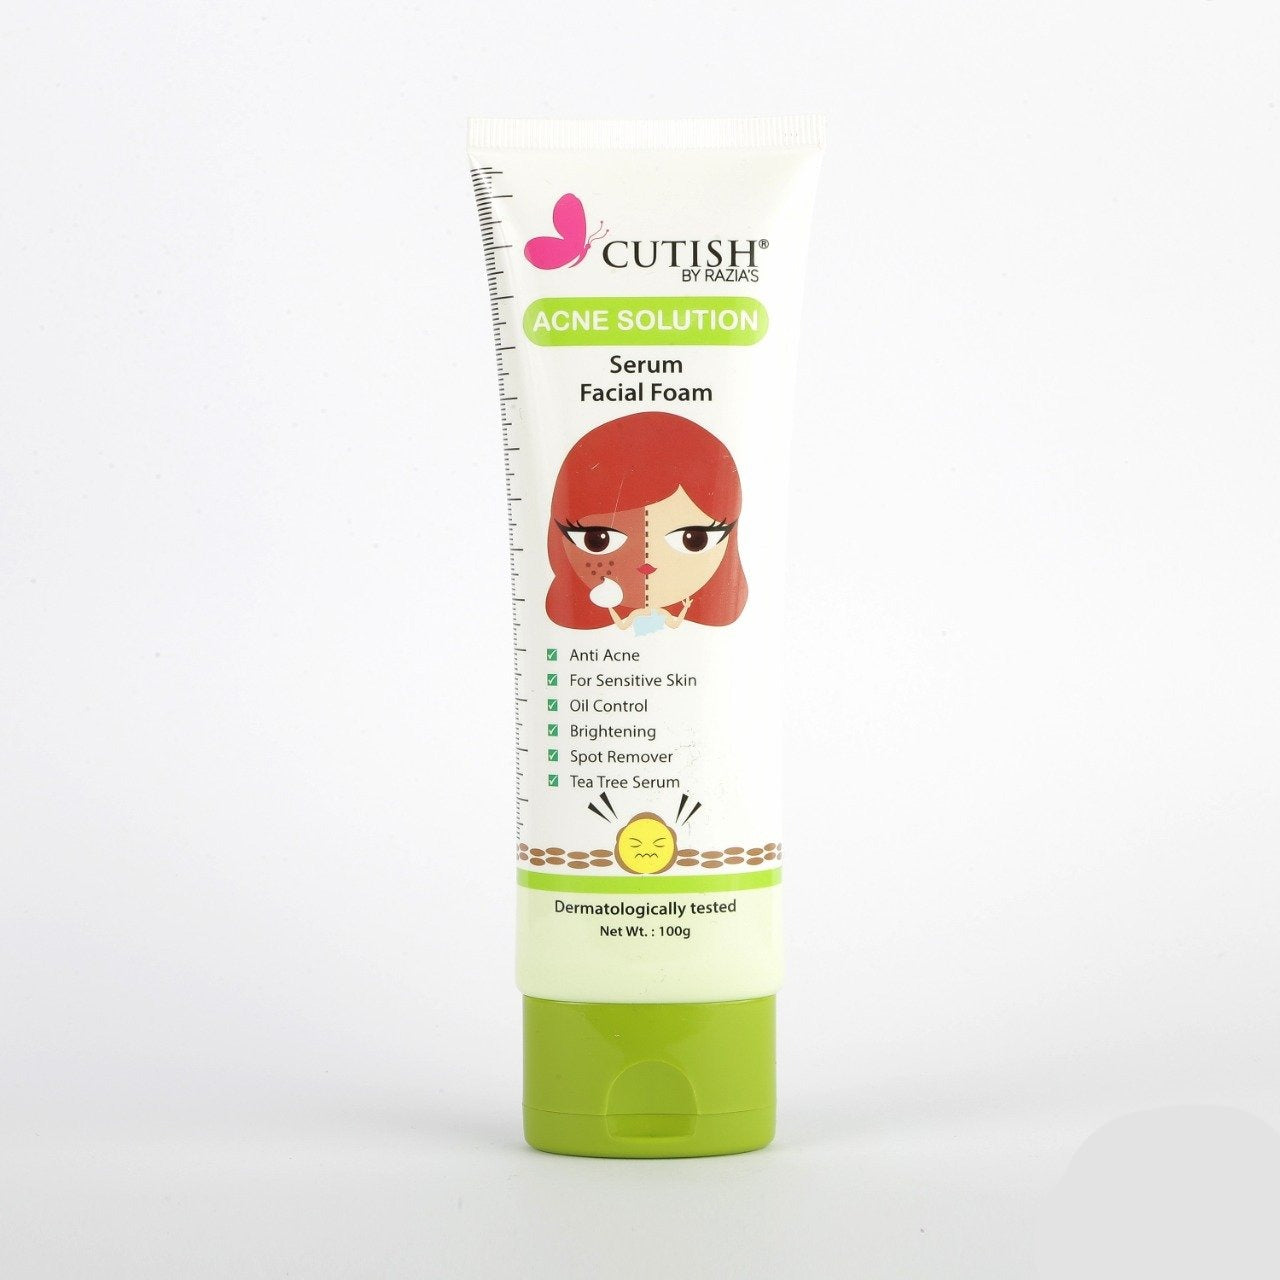 Cutish Acne Solution Facewash Serum Facial Foam 100g freeshipping - lasertag.pk